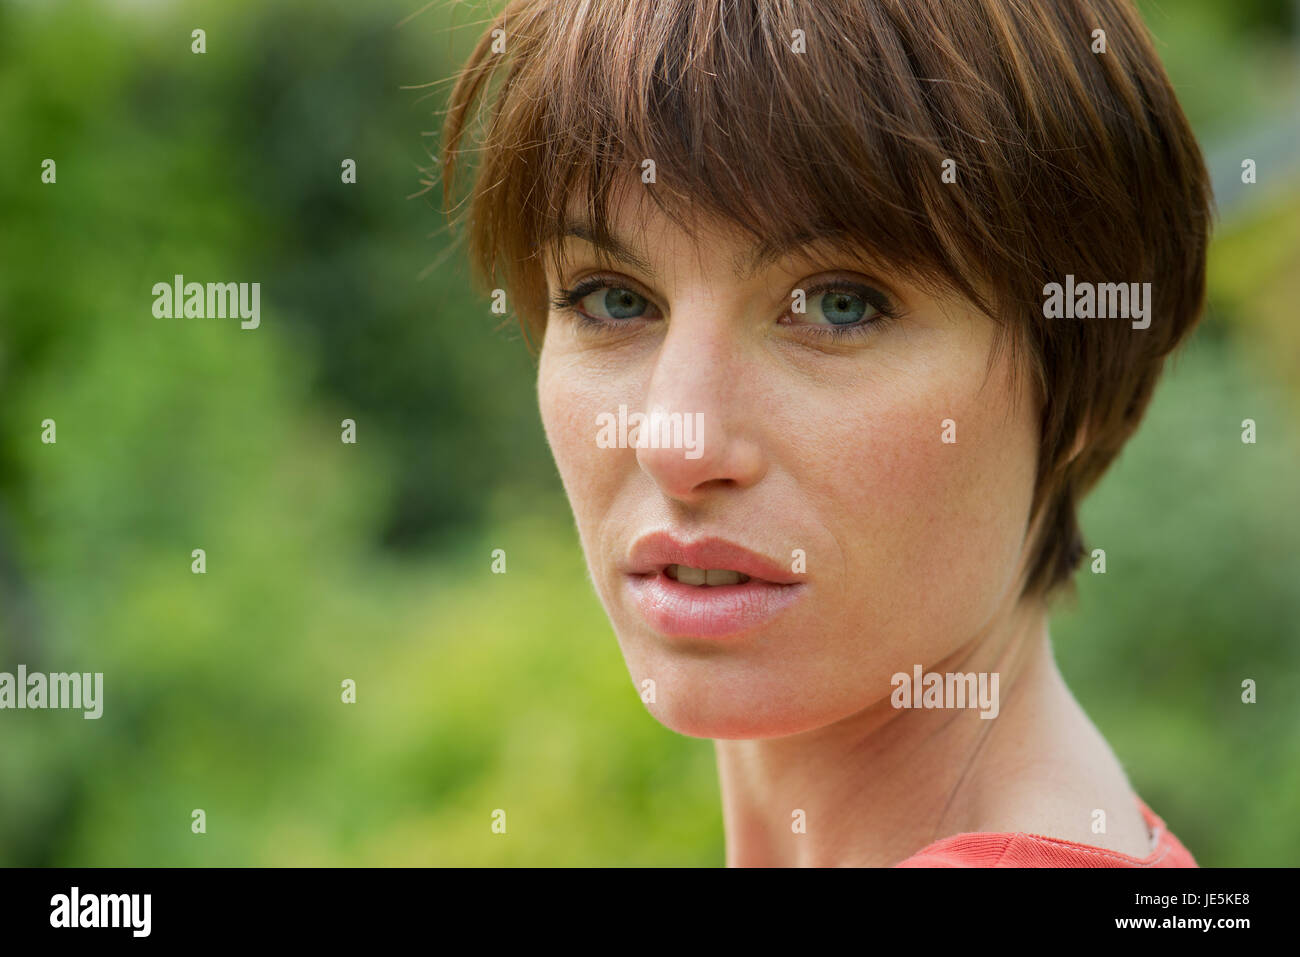 Woman looking over shoulder, portrait Stock Photo